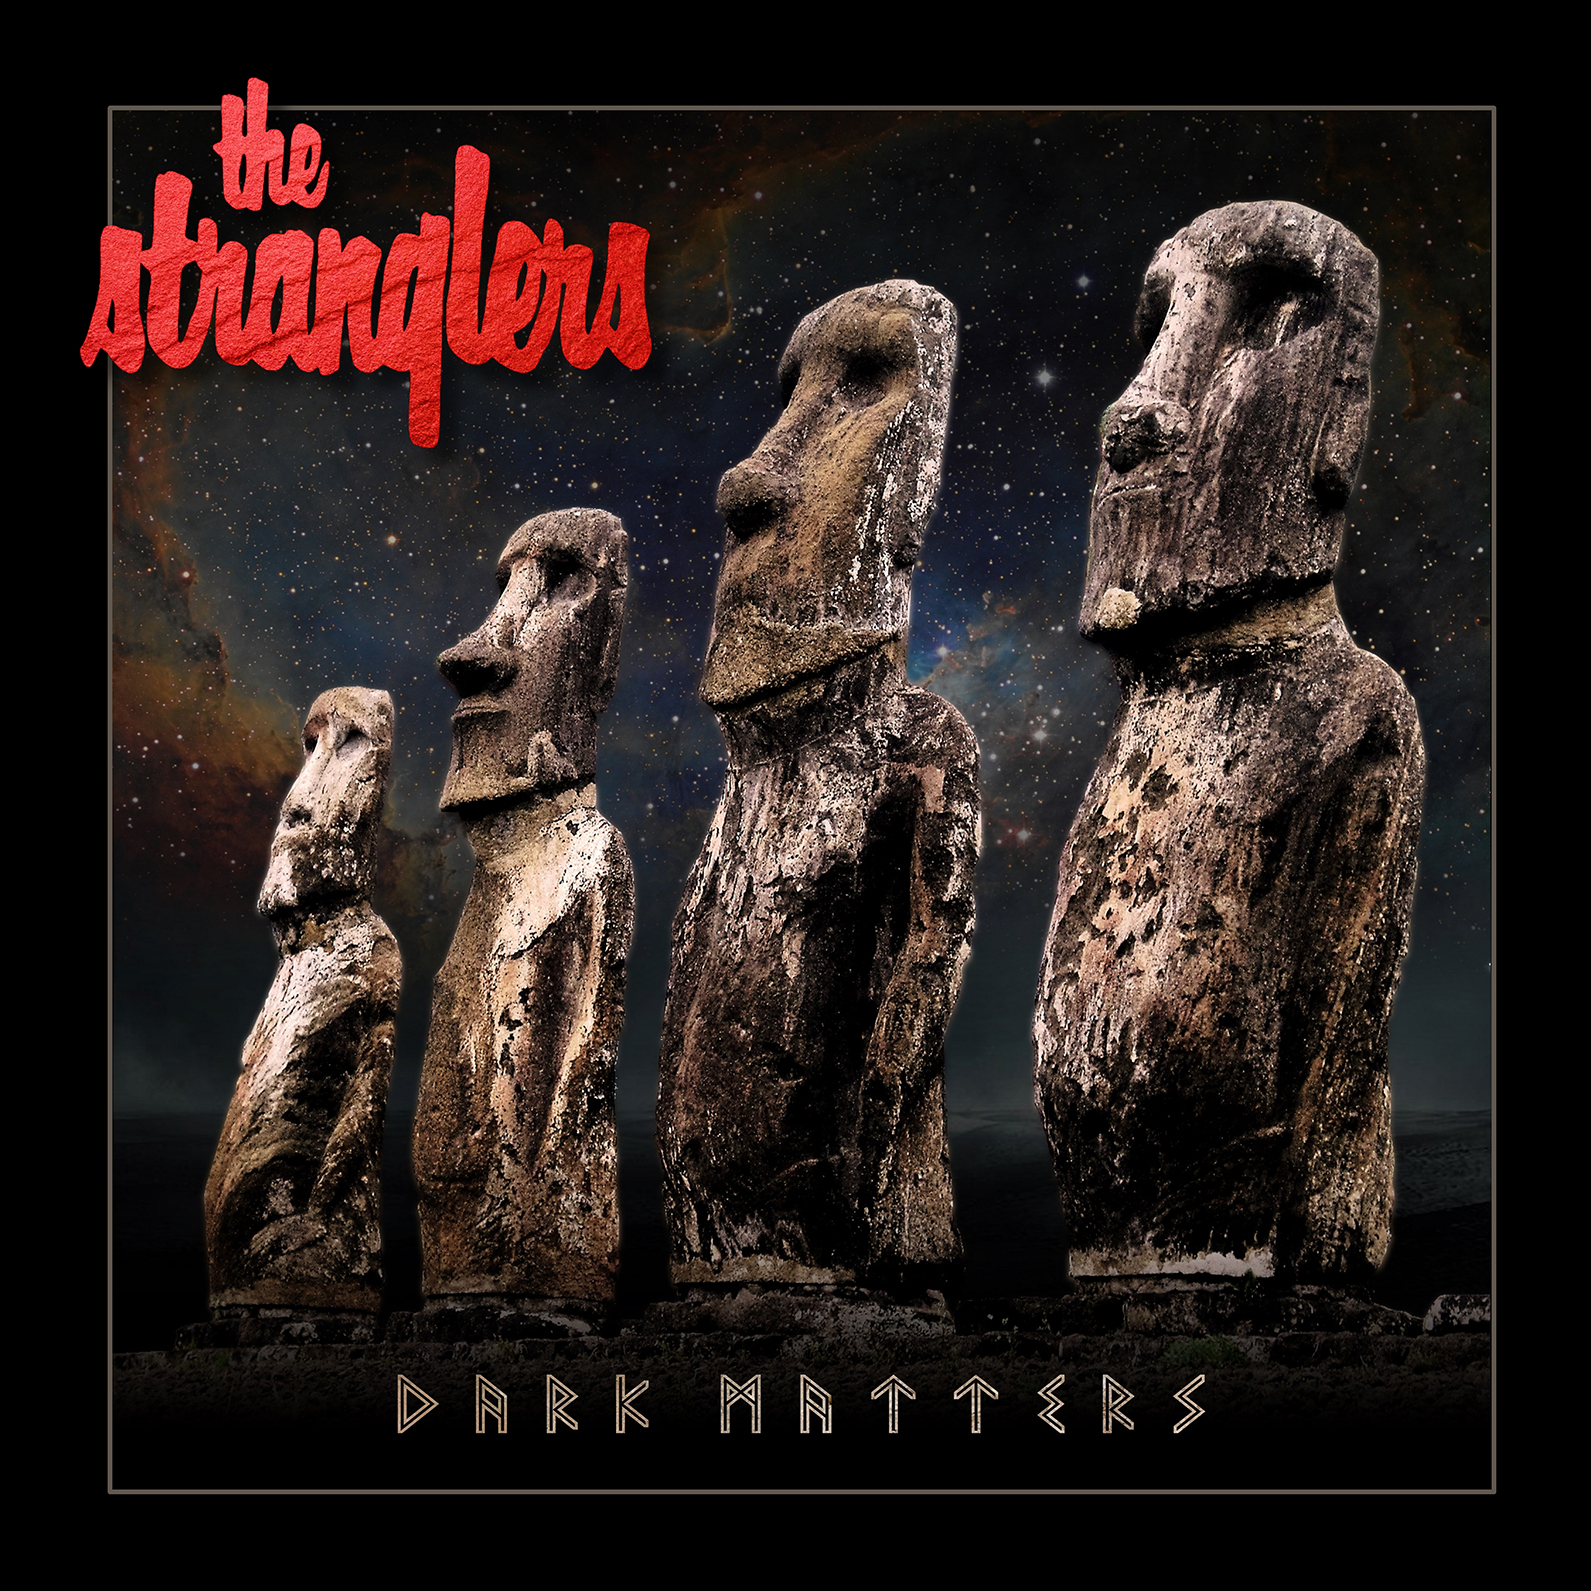 THE STRANGLERS announce new album 'Dark Matters' due for release on 10th September 2021 